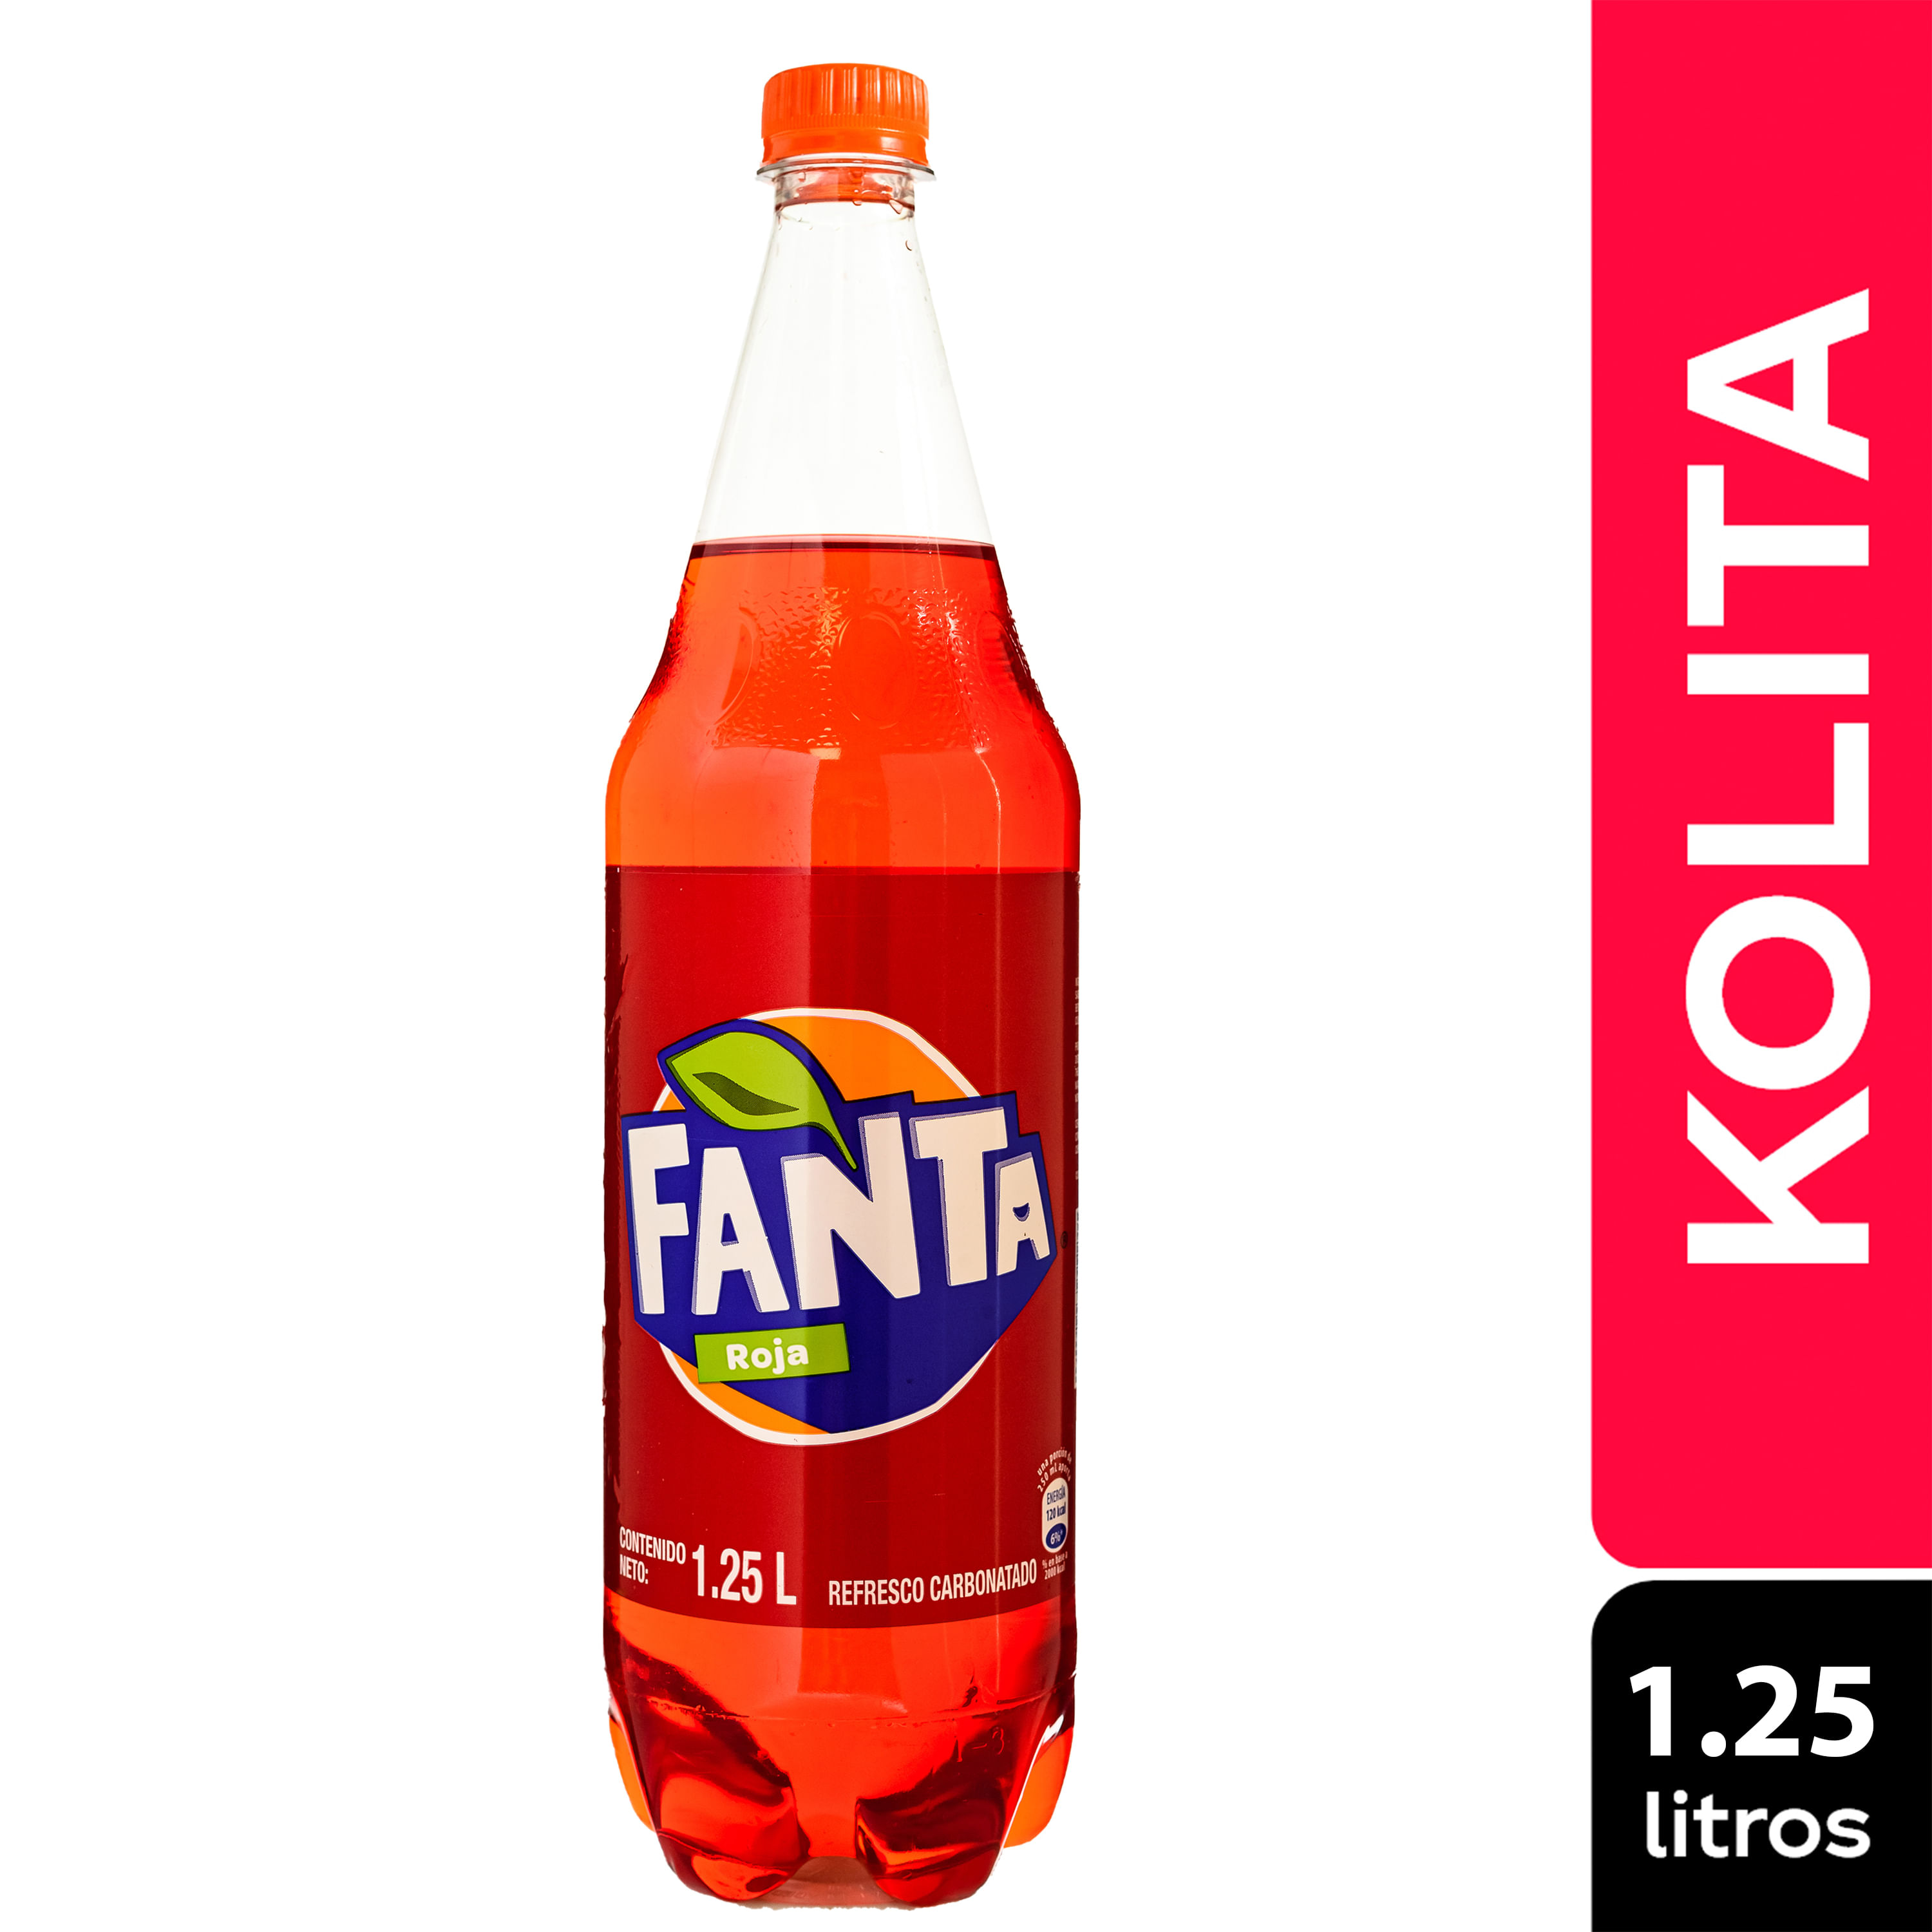 Fanta Combo Pack! - $16.95 - TicoShopping